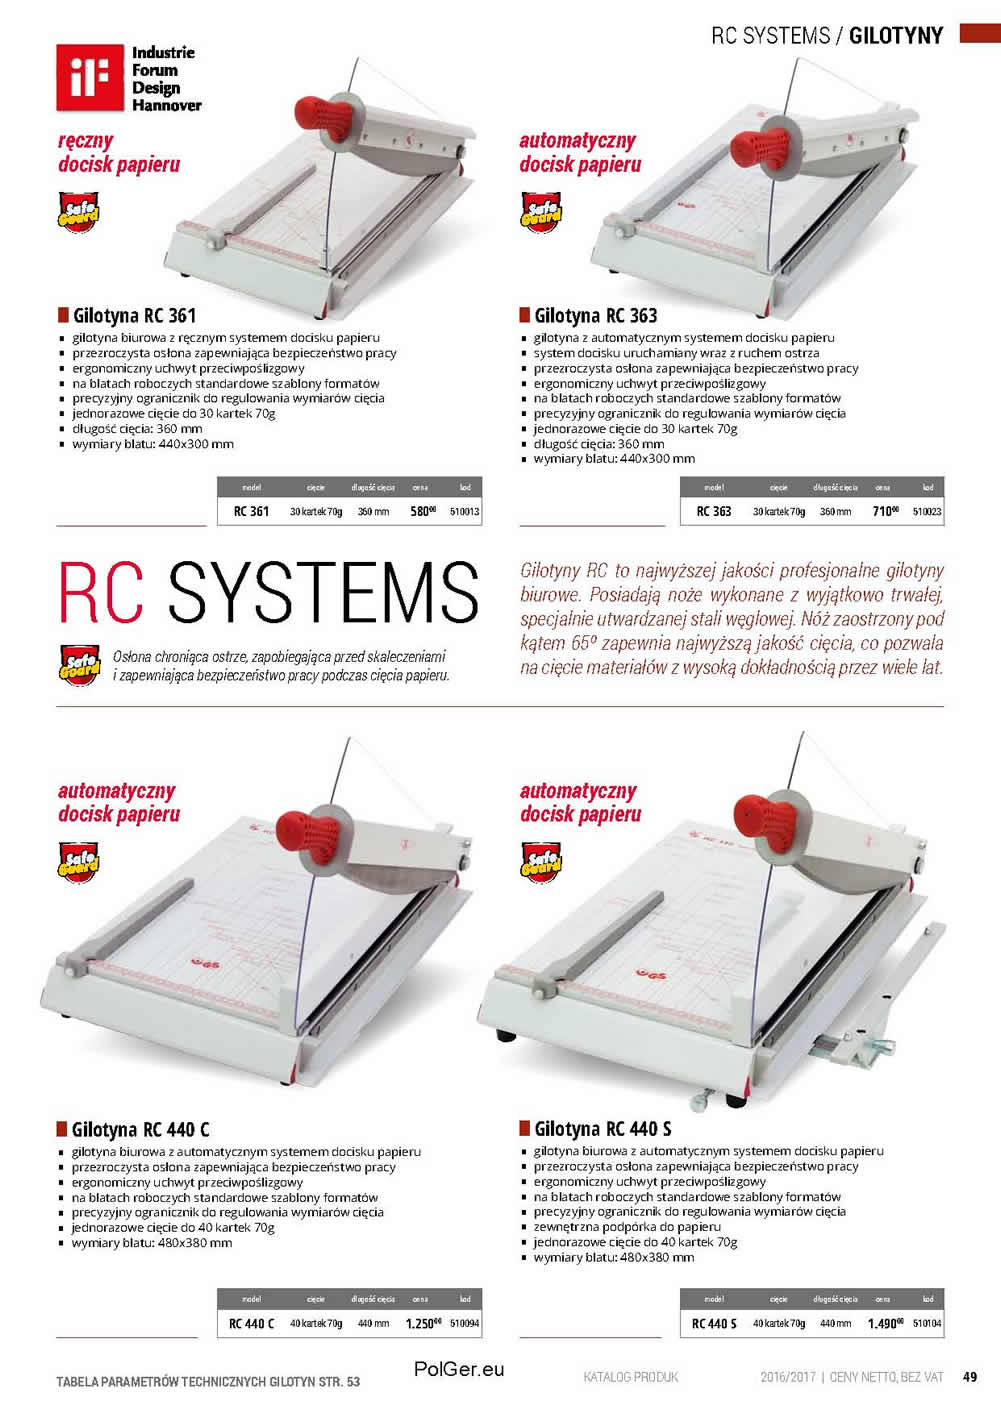 gilotyny rc systems